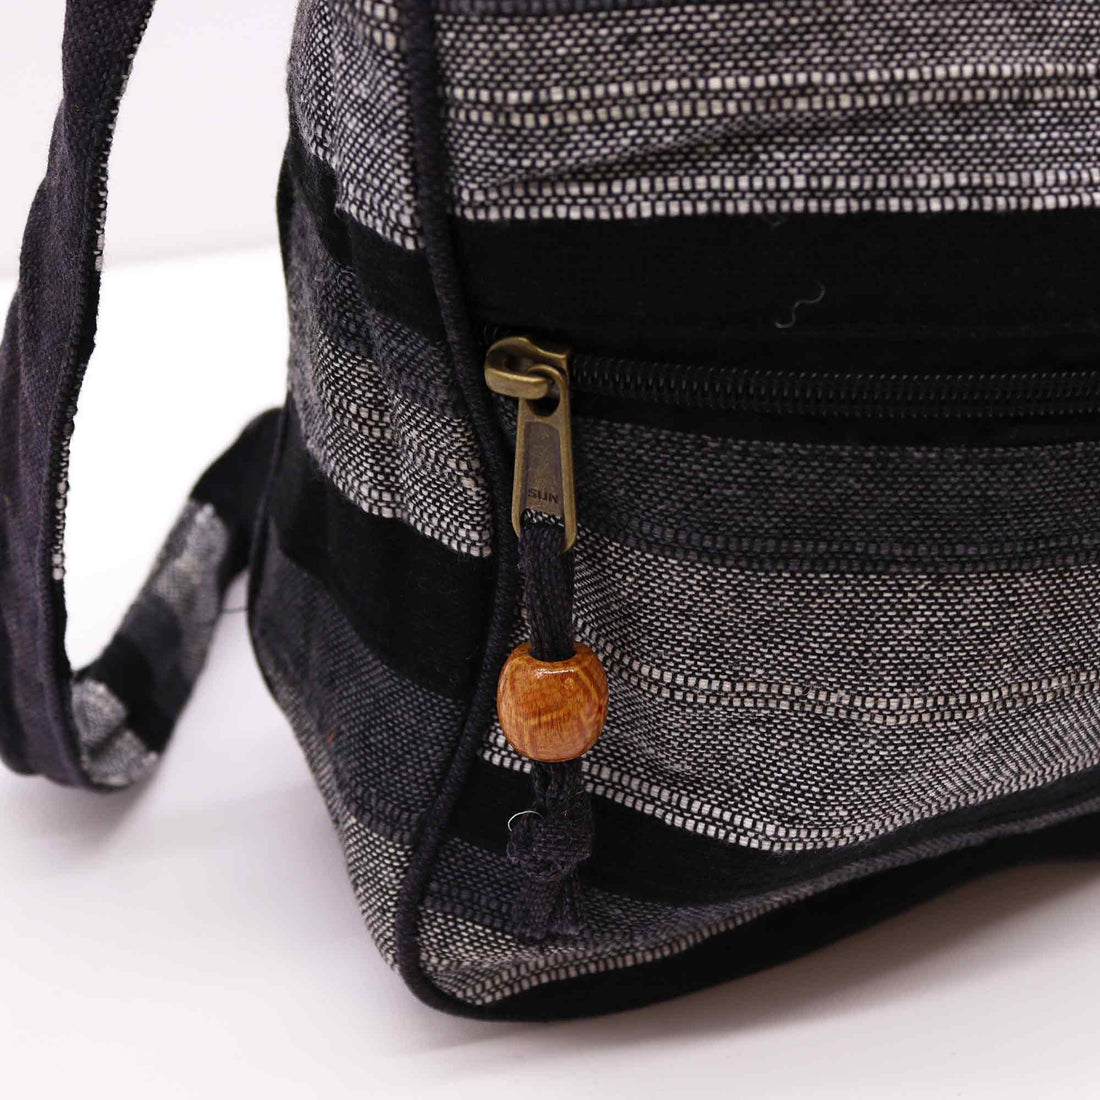 Lrg Nepal Sling Bag  (Adjustable Strap) - Mountain Granite